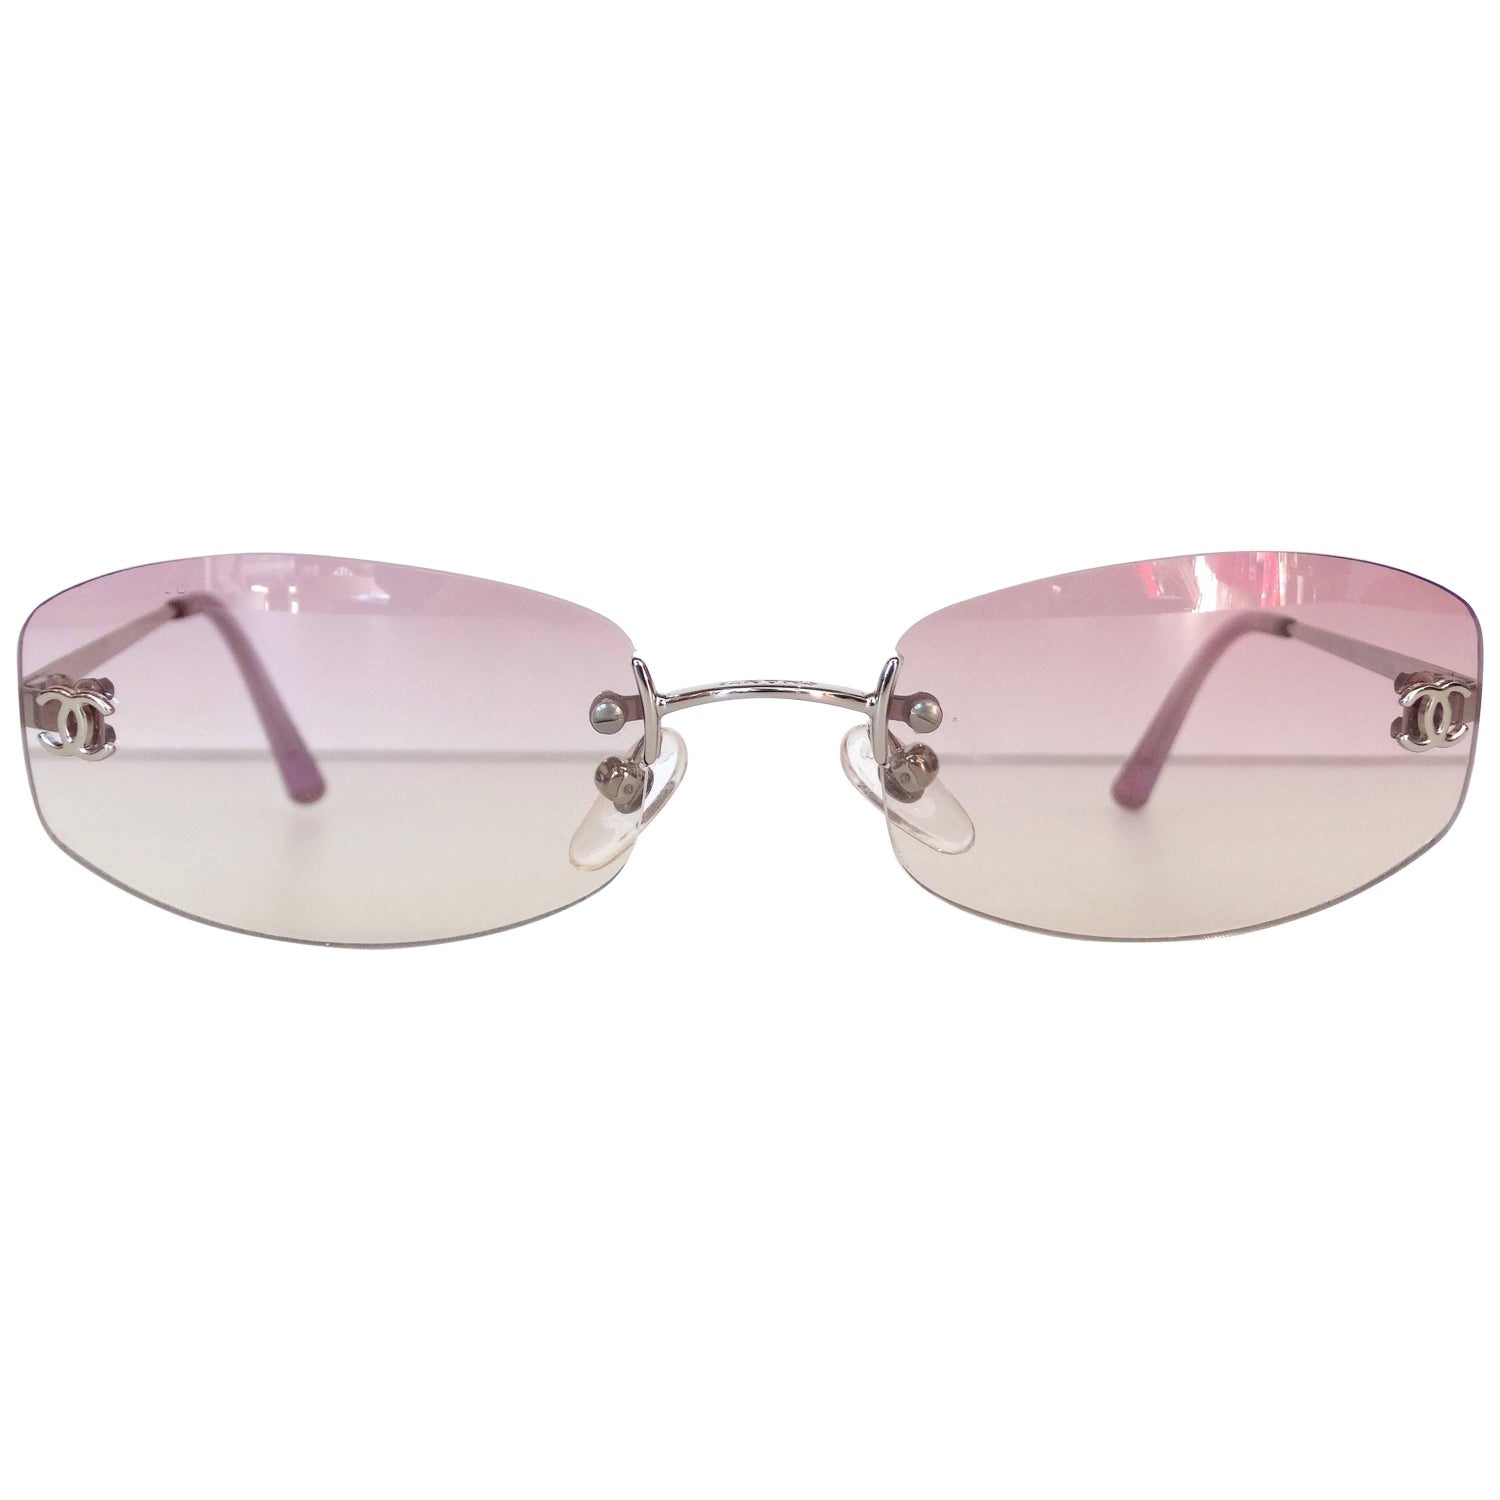 Chanel Pink Glasses - 4 For Sale on 1stDibs